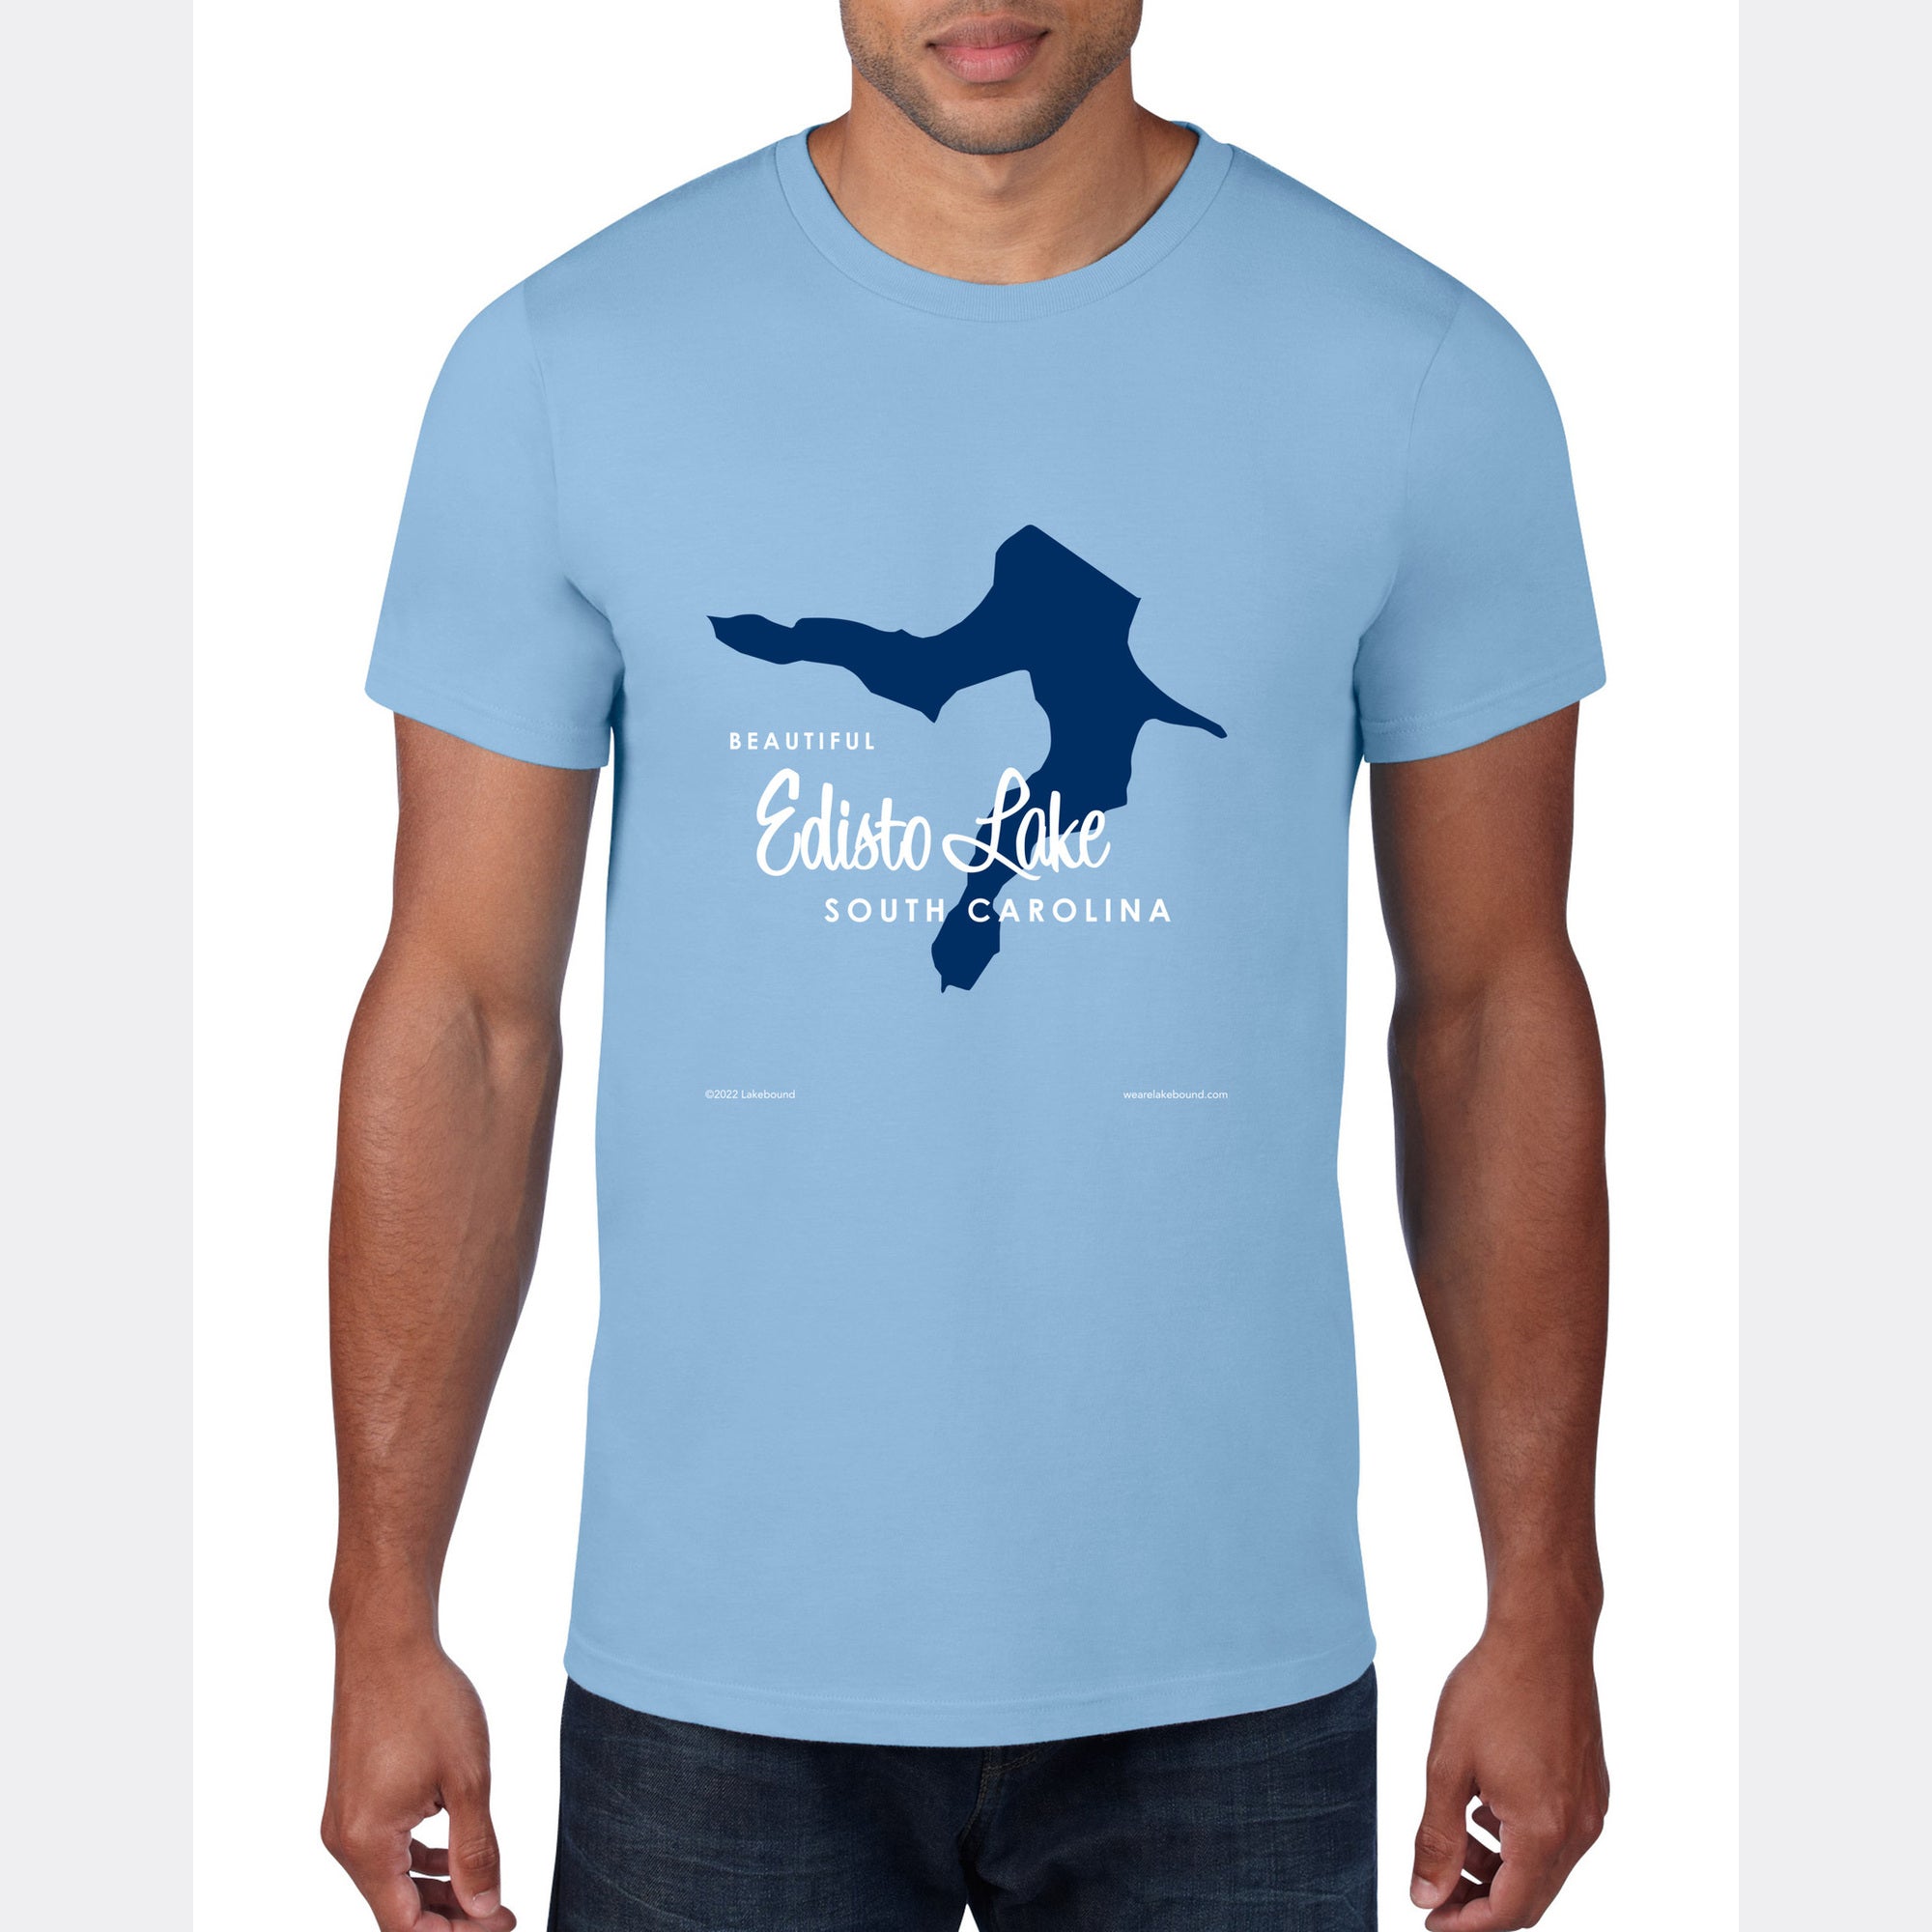 Edisto Lake South Carolina, T-Shirt